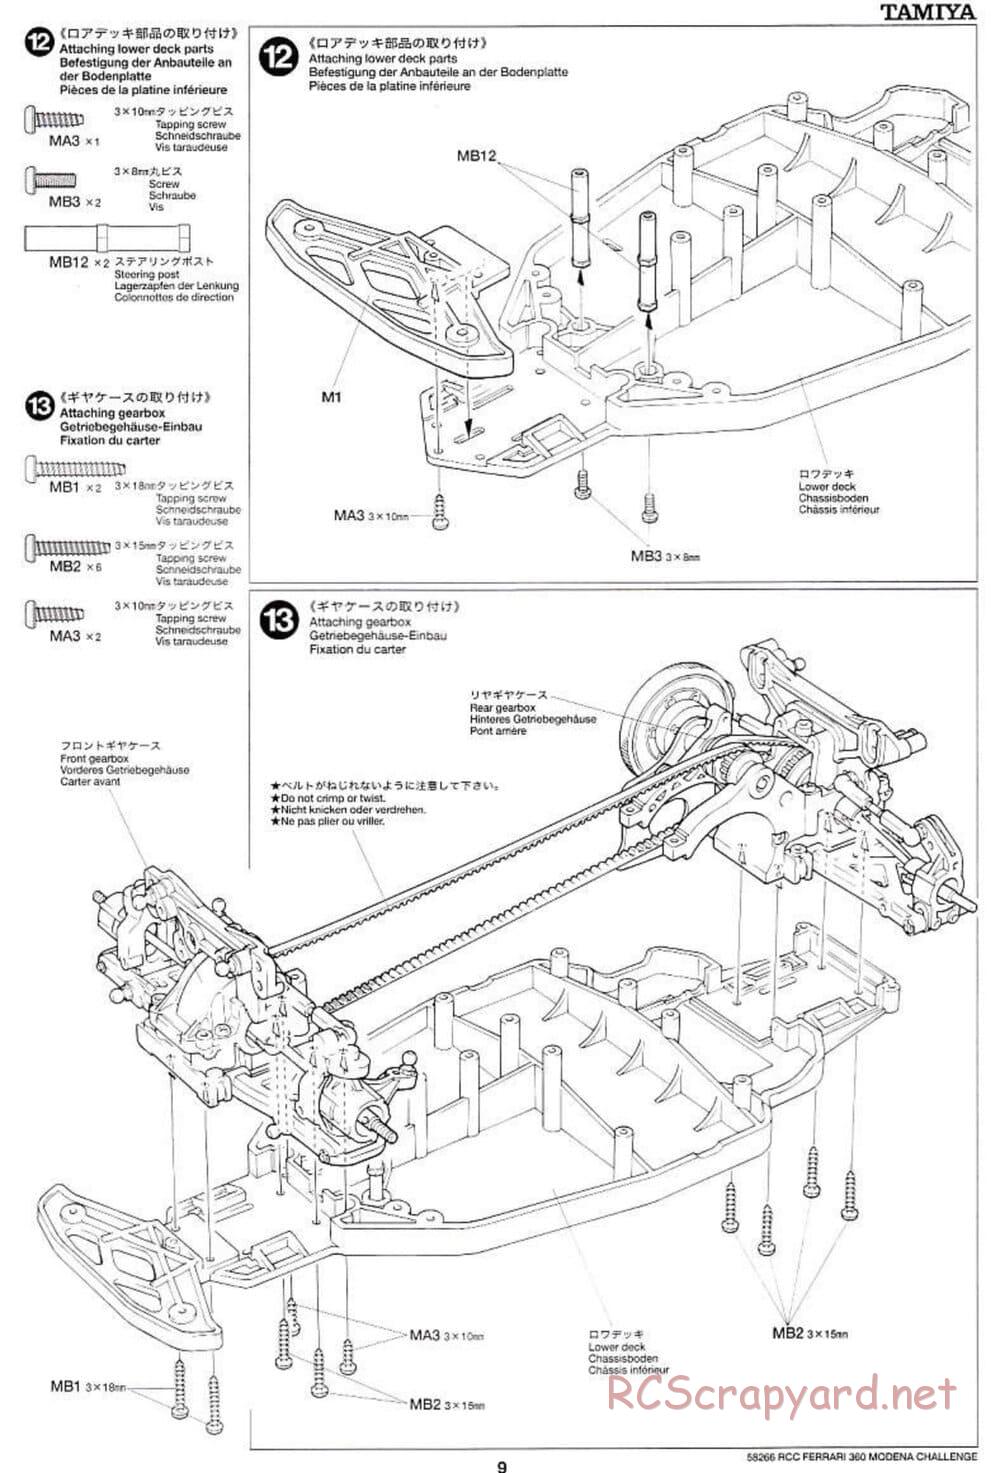 Tamiya - Ferrari 360 Modena Challenge - TA-04 Chassis - Manual - Page 9